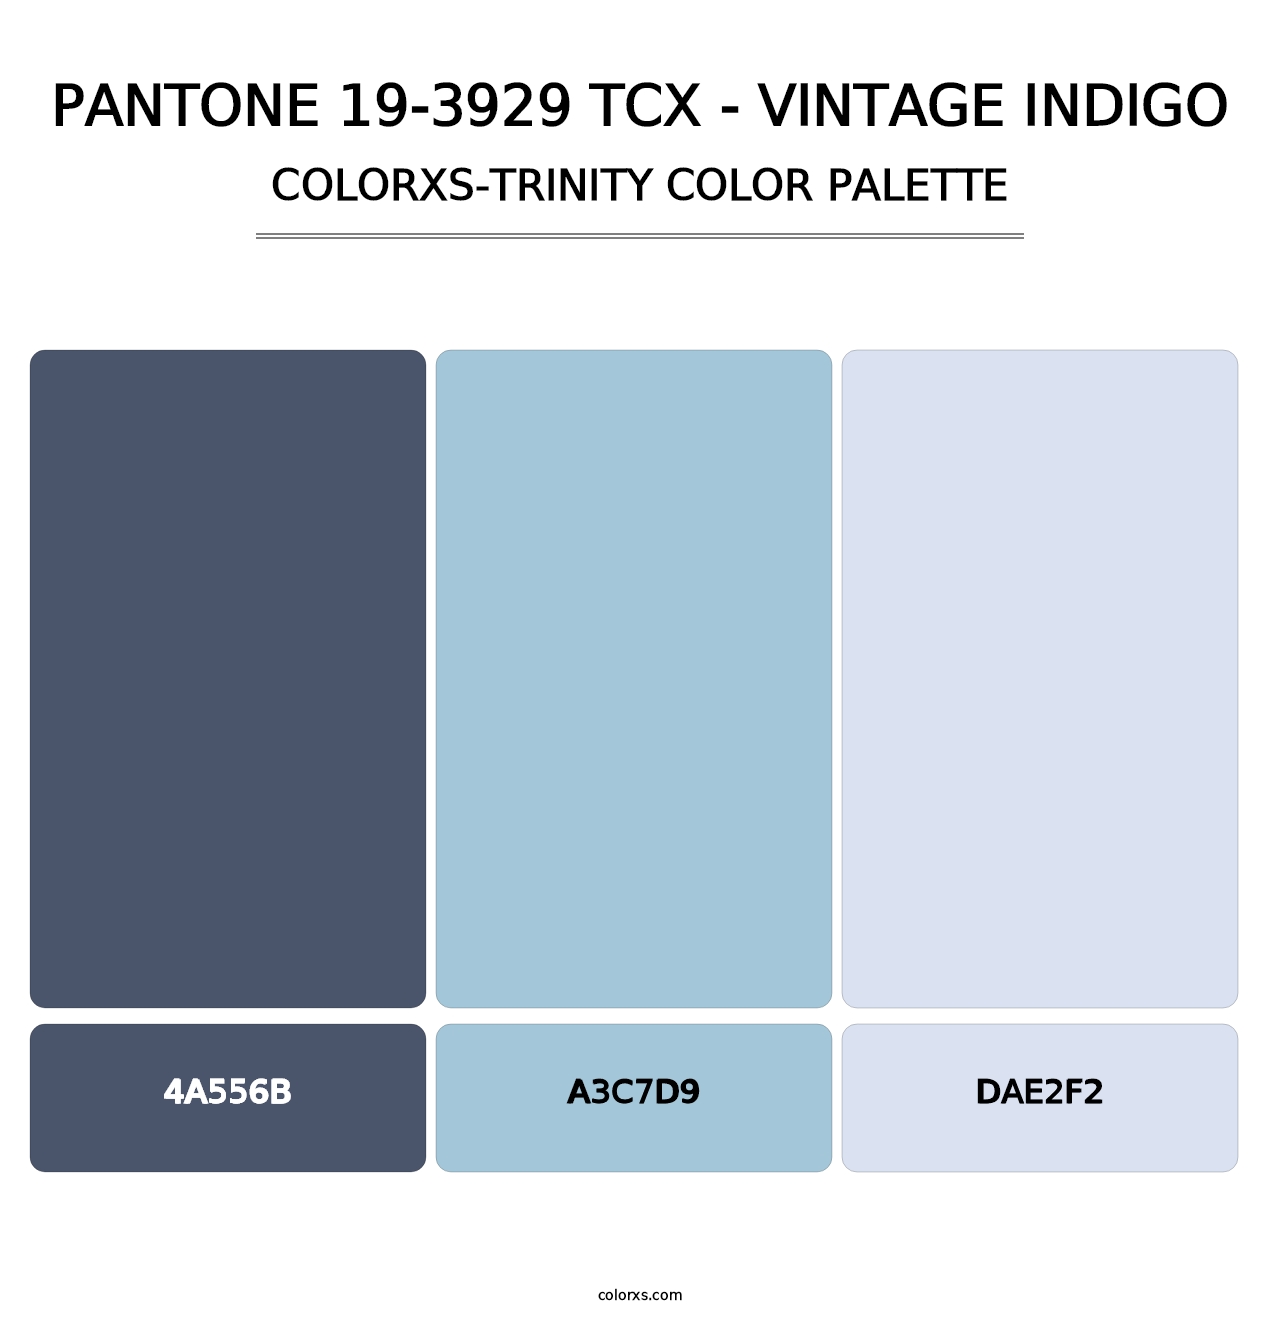 PANTONE 19-3929 TCX - Vintage Indigo - Colorxs Trinity Palette